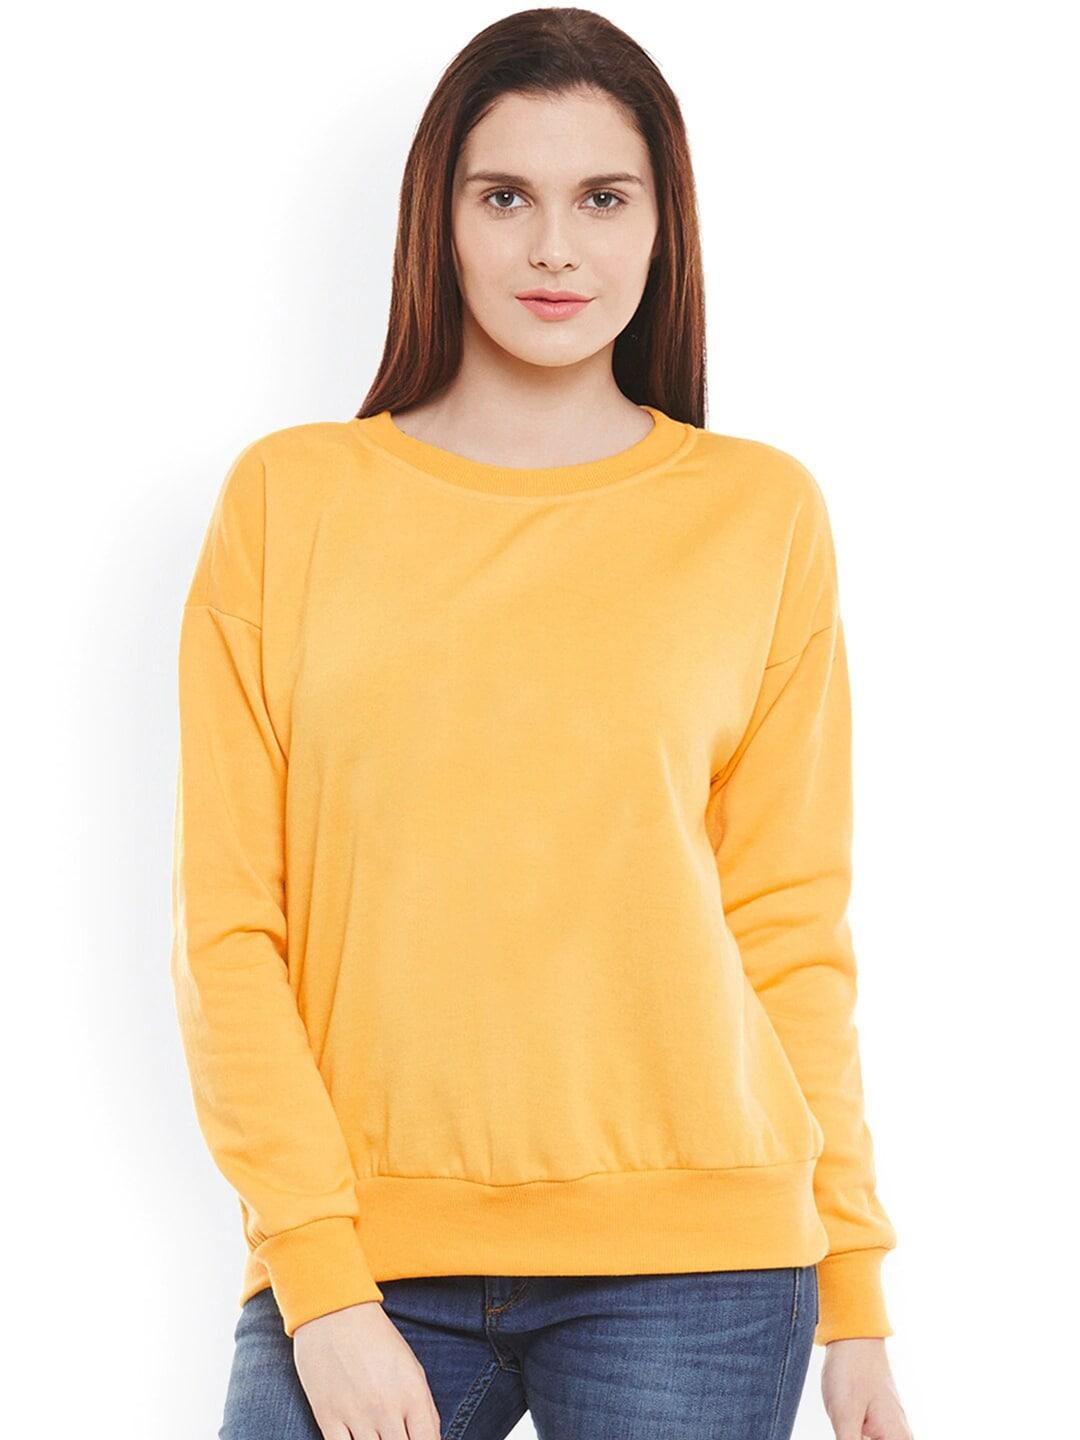 baesd women yellow sweatshirt